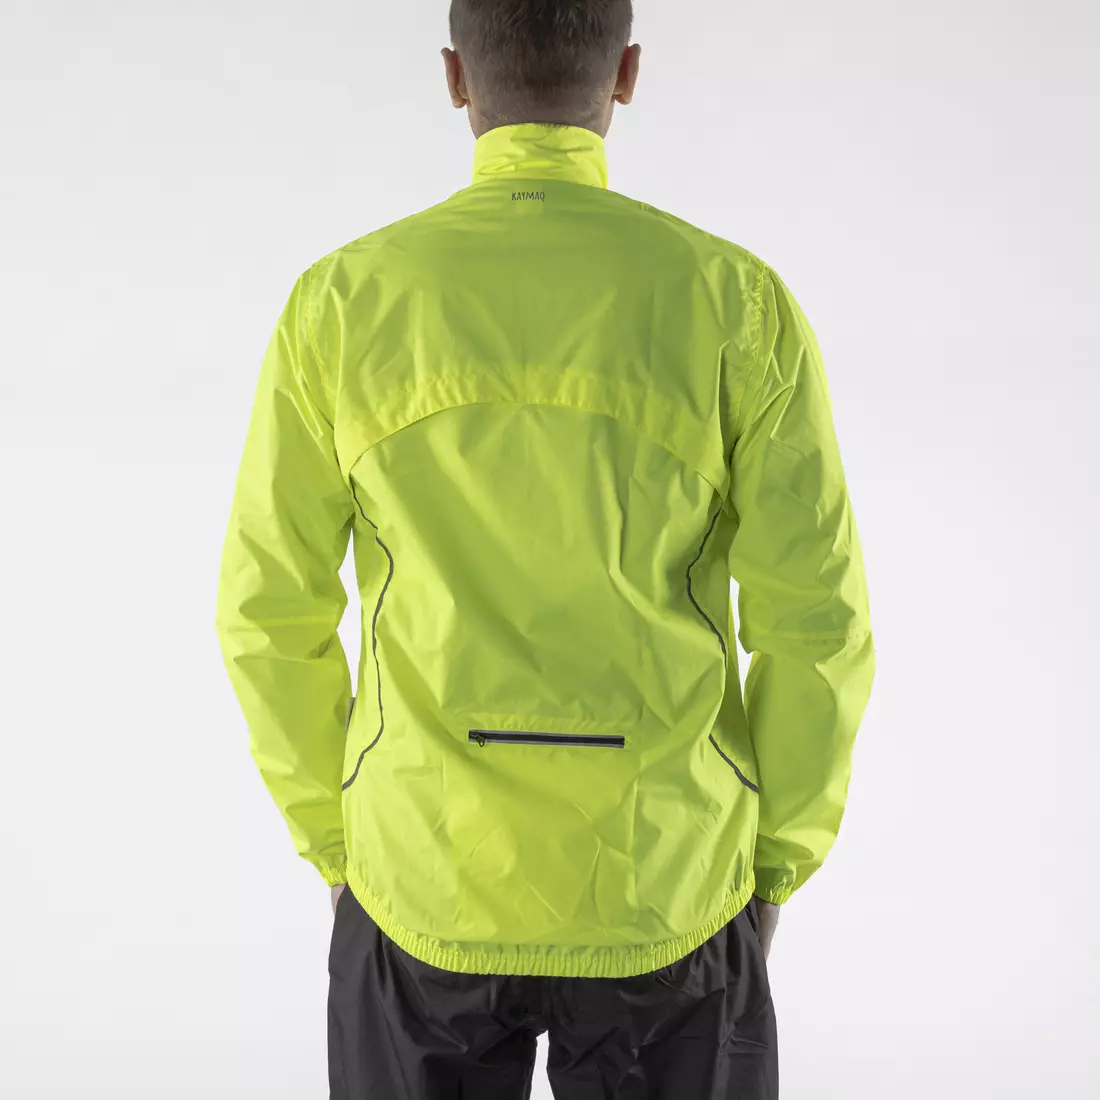 KAYMAQ J1 men's rain cycling jacket, fluo yellow